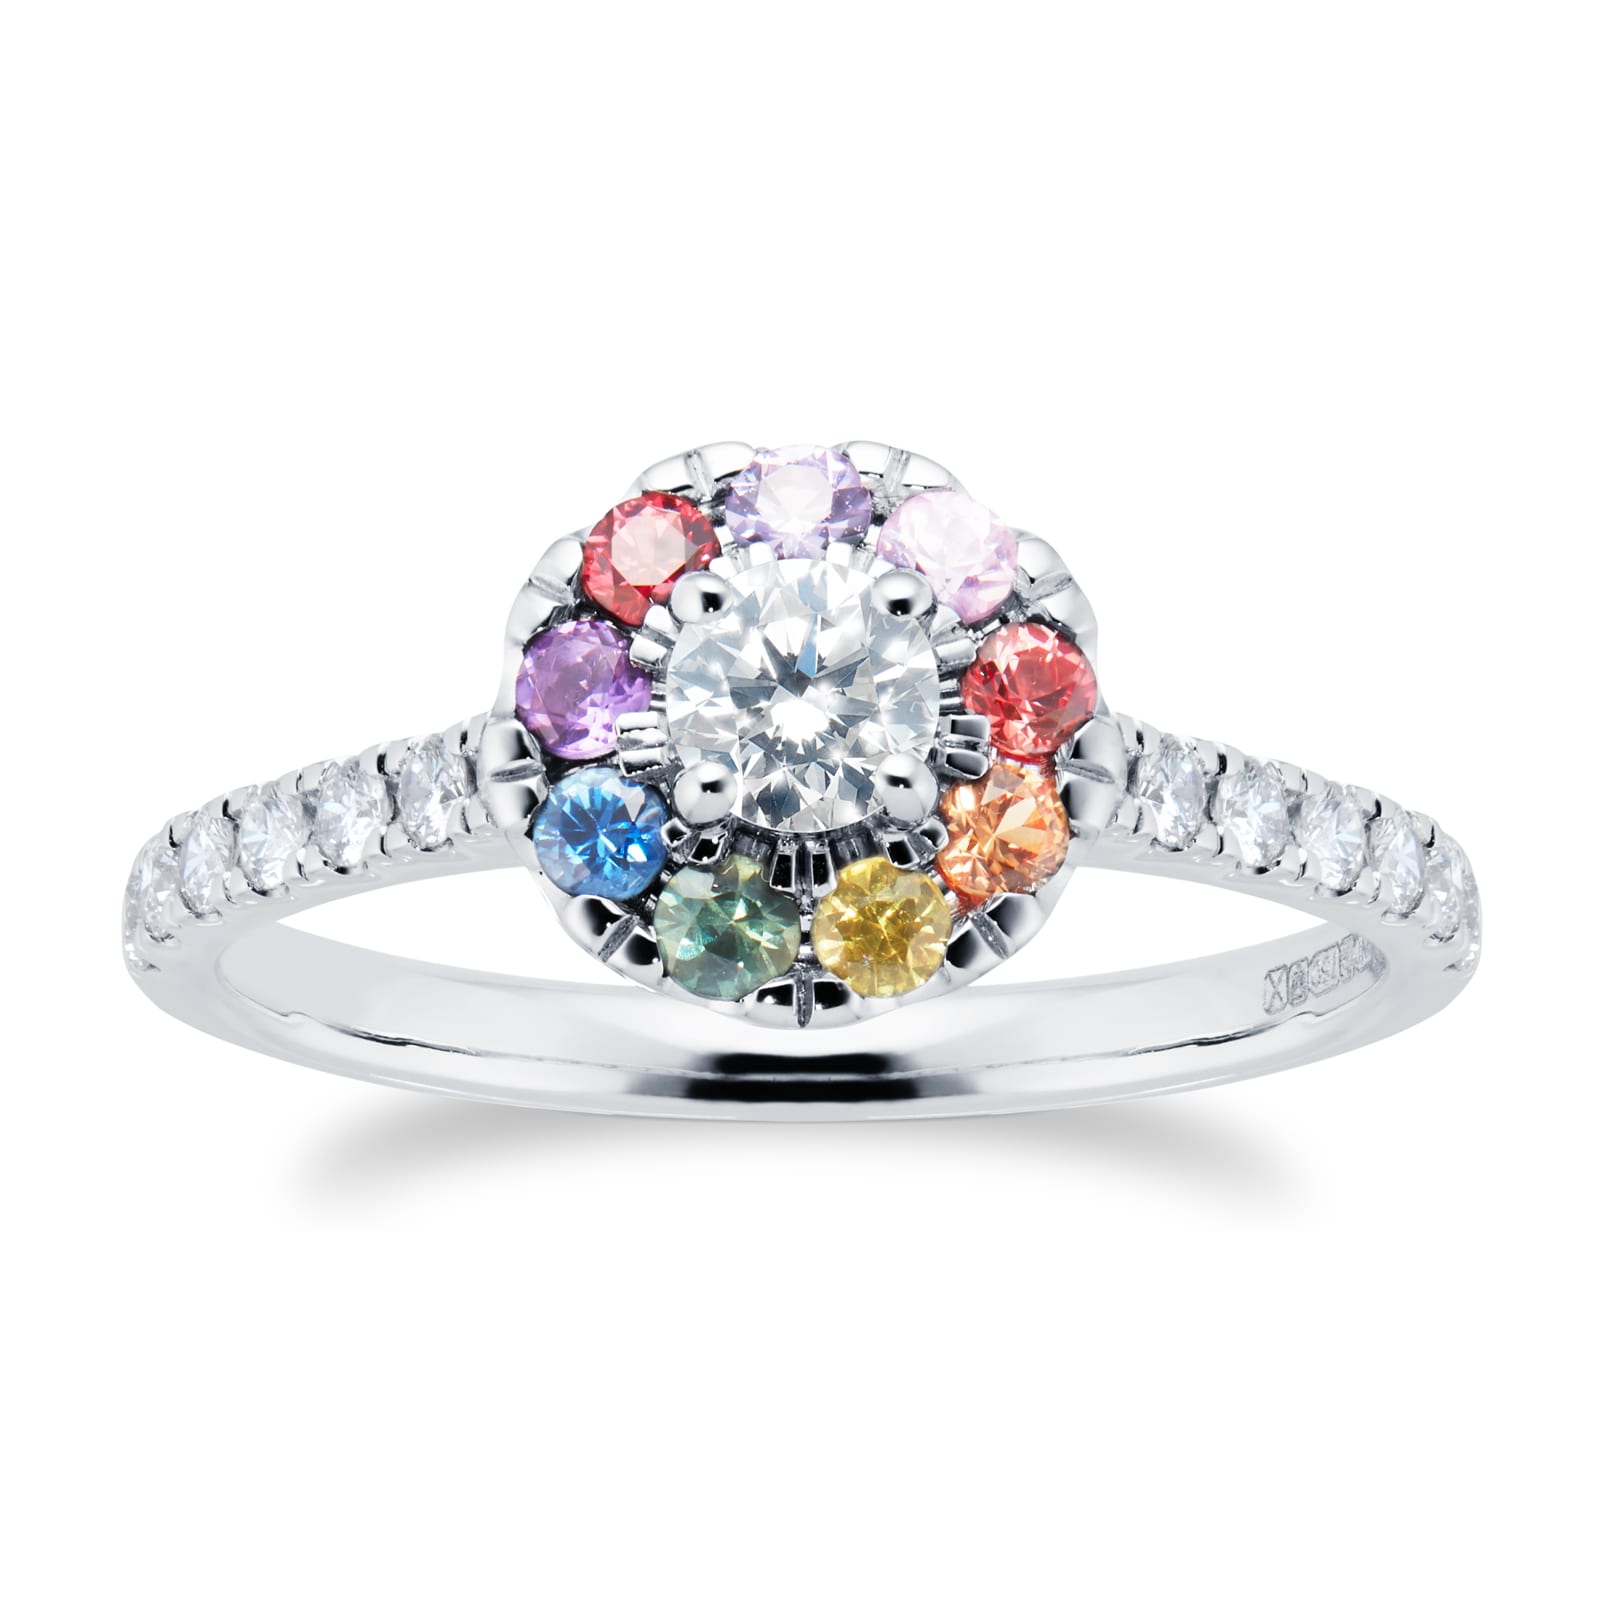 18ct White Gold Diamond & Rainbow Sapphire Halo Ring - Ring Size M.5